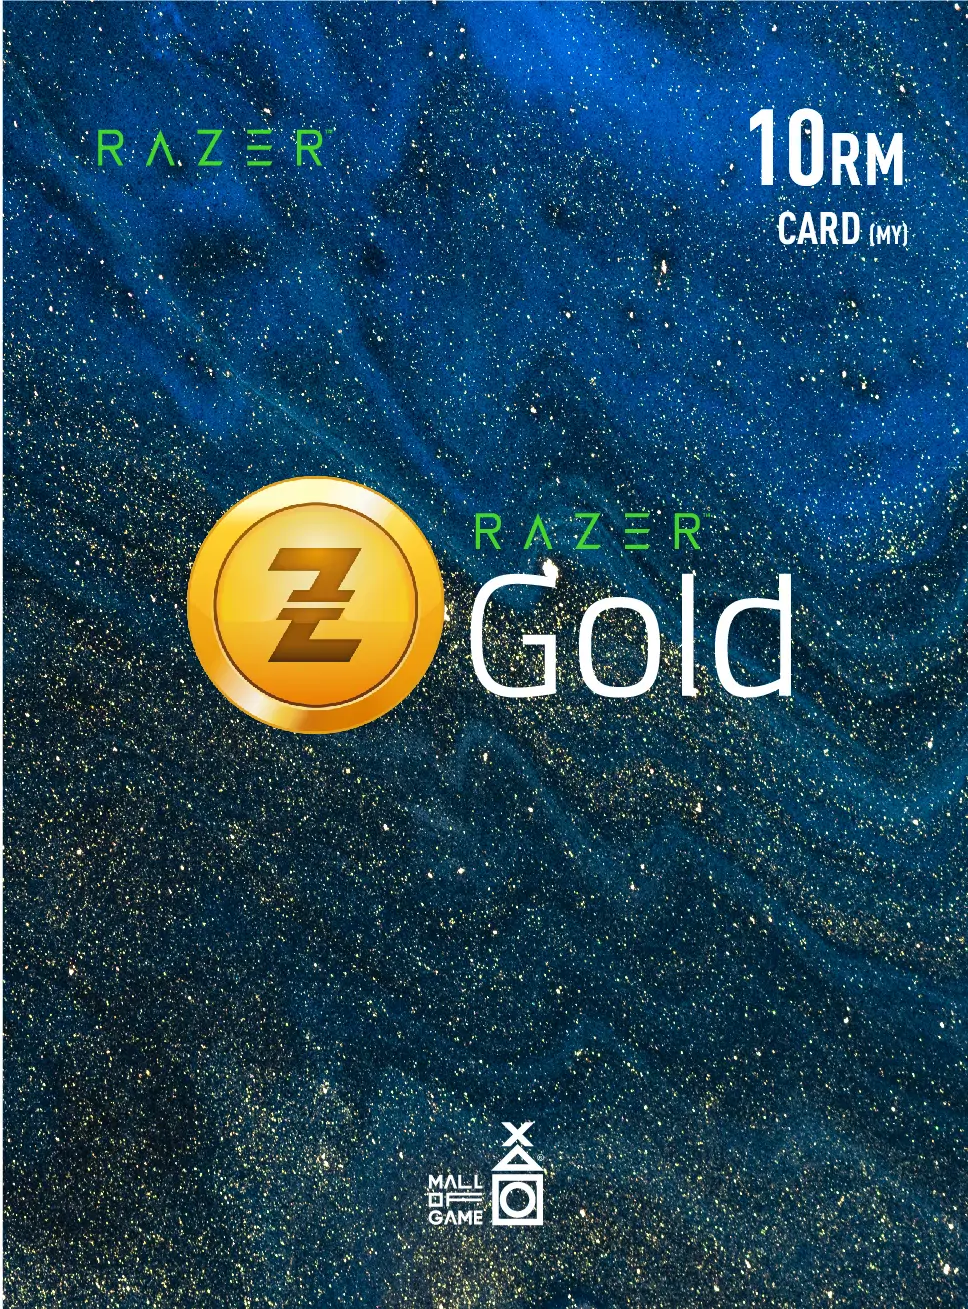 Razer Gold RM10 (MY)